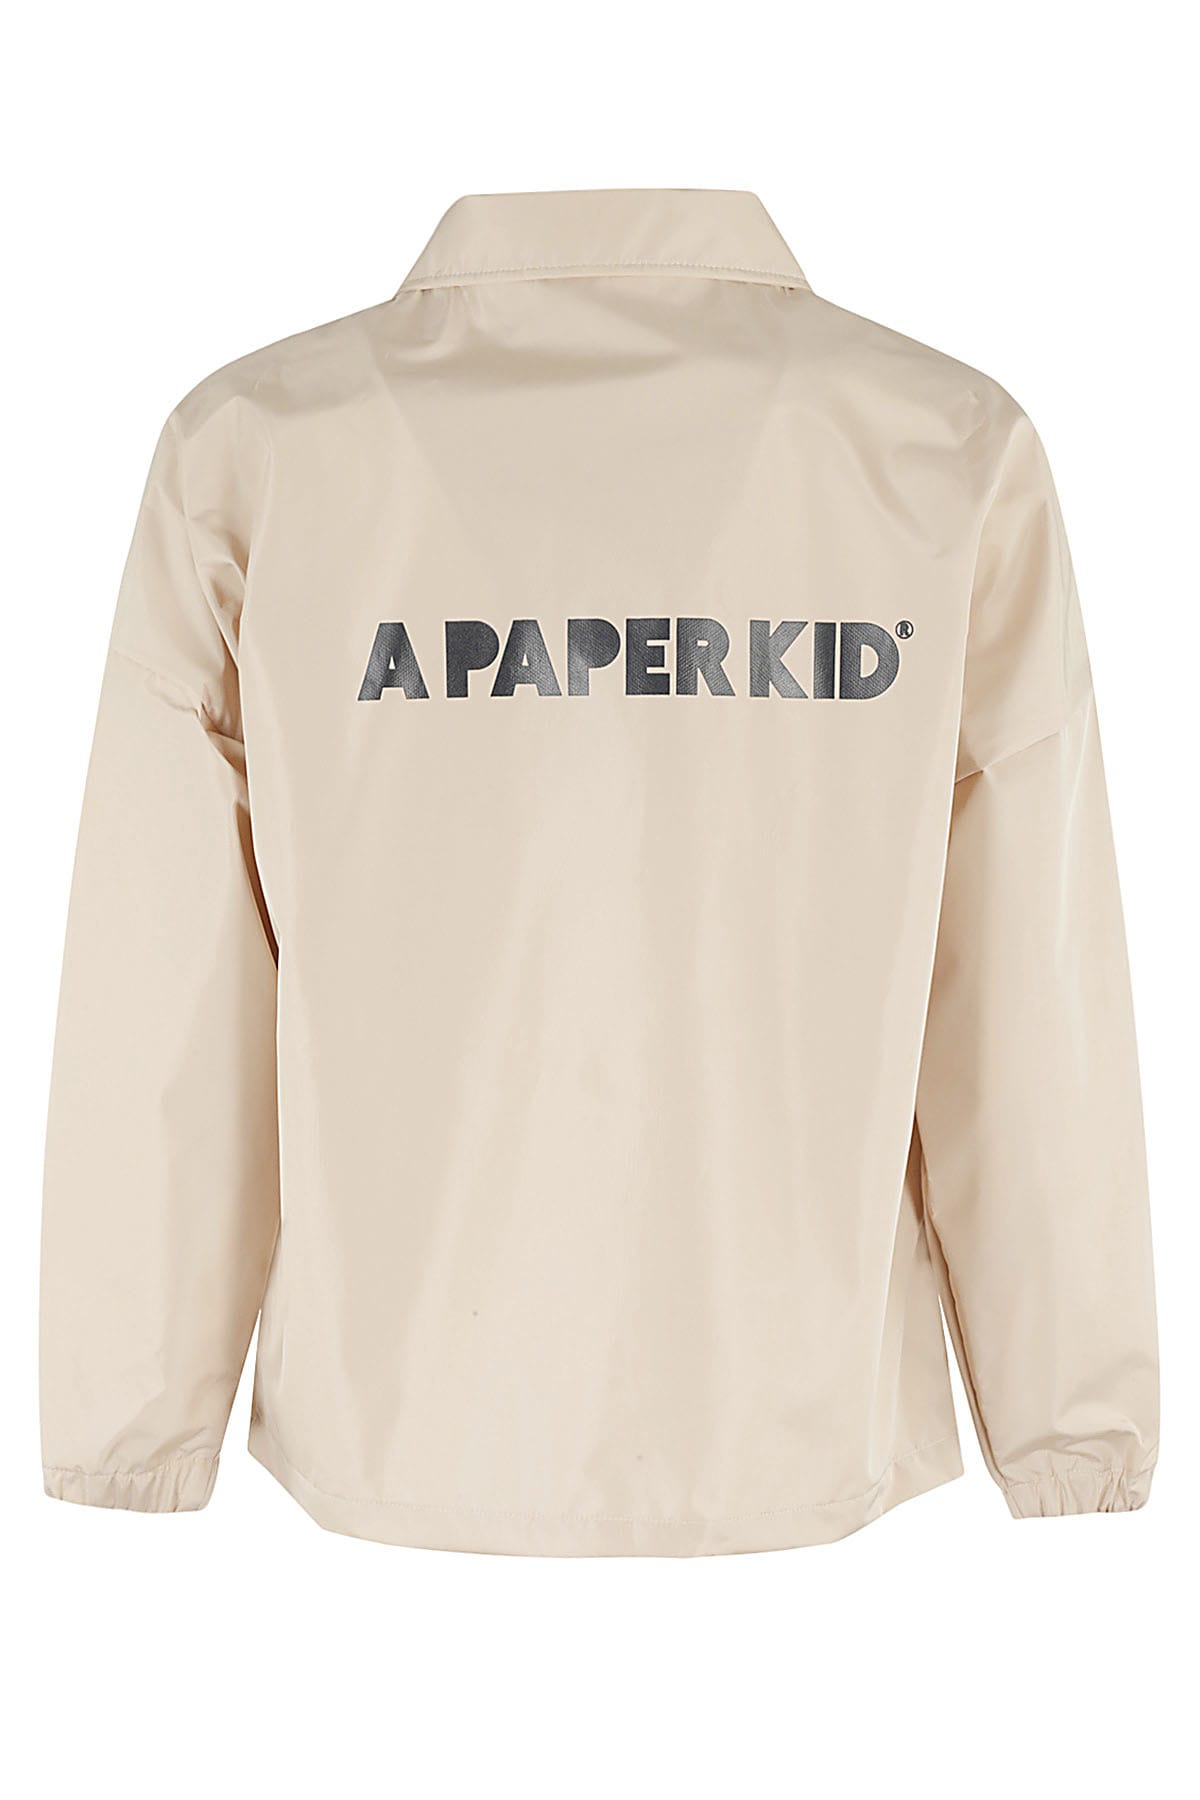 Shop A Paper Kid Nylon Jacket In Sabbia